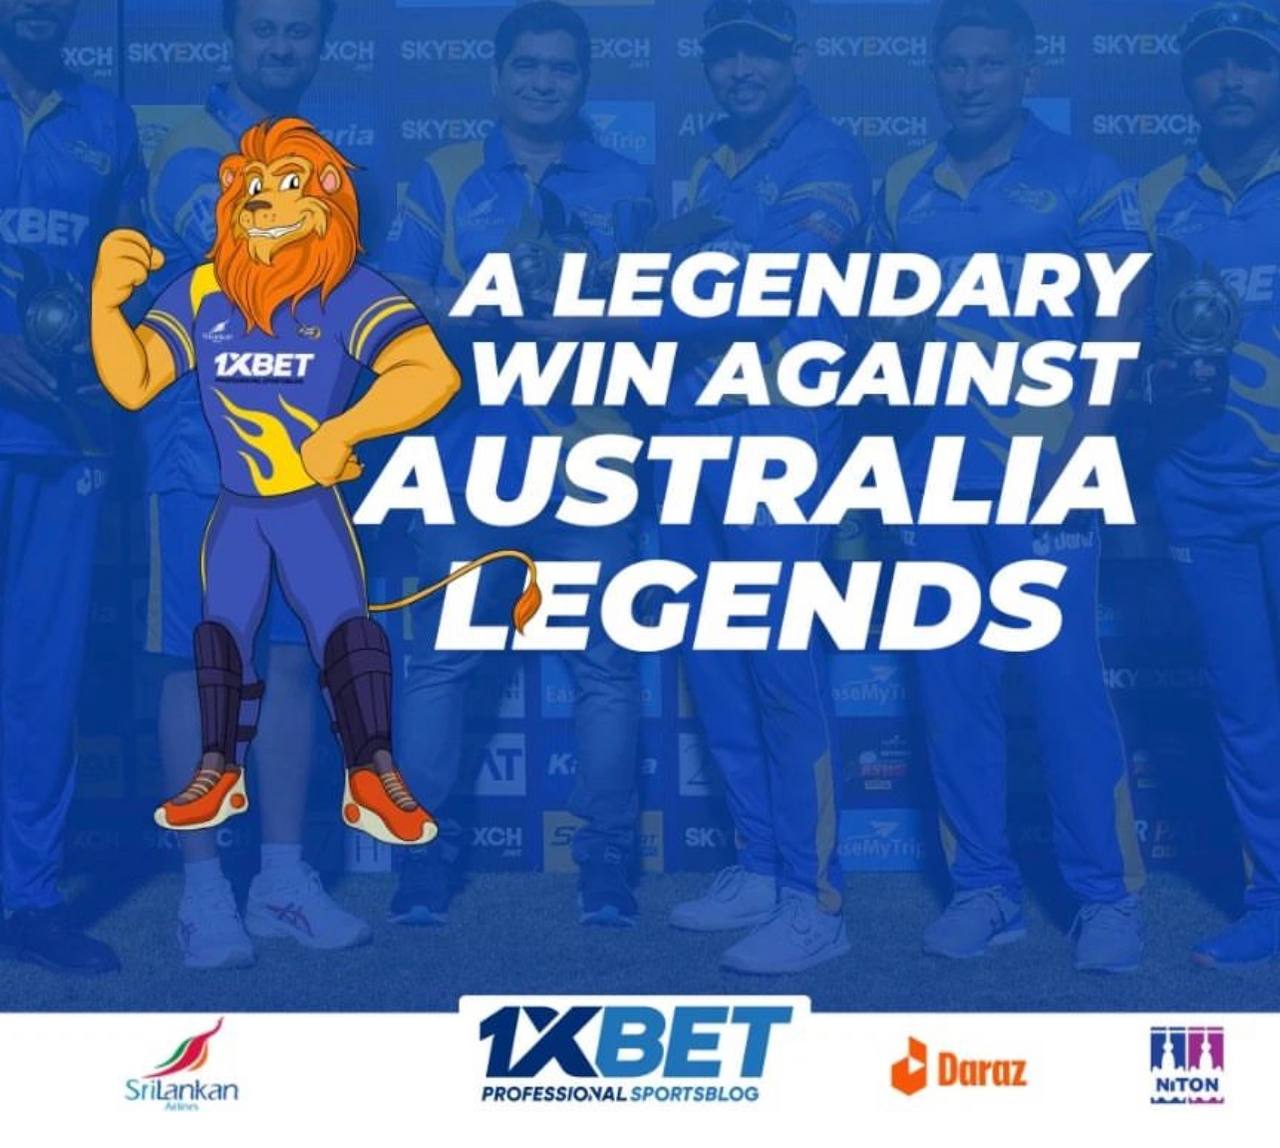 Sri Lanka Legends won by 38 runs